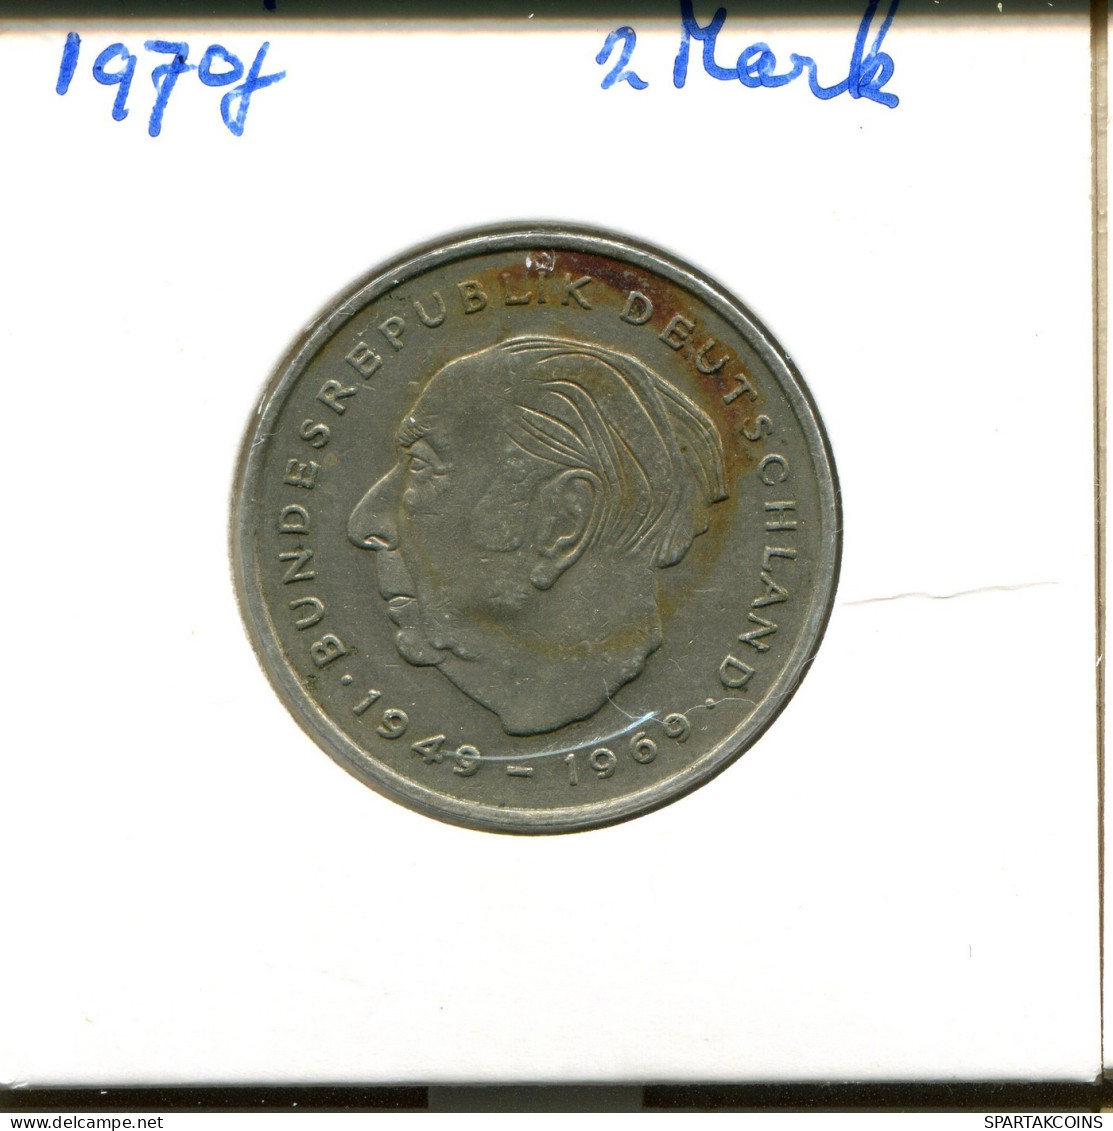 2 DM 1970 J T. HEUSS WEST & UNIFIED GERMANY Coin #DA824.U.A - 2 Mark